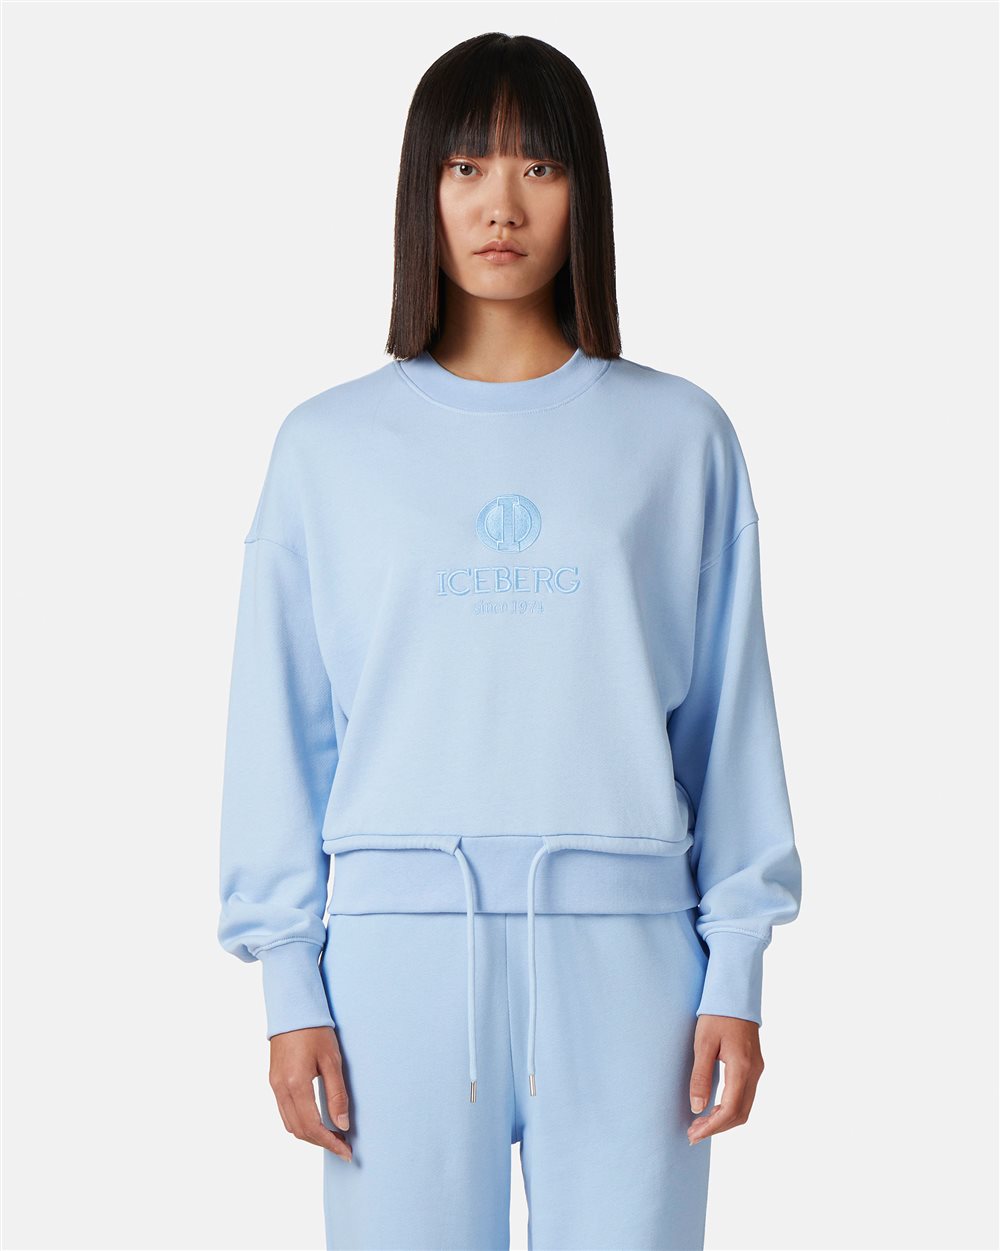 Sweatshirt with logo - Iceberg - Official Website